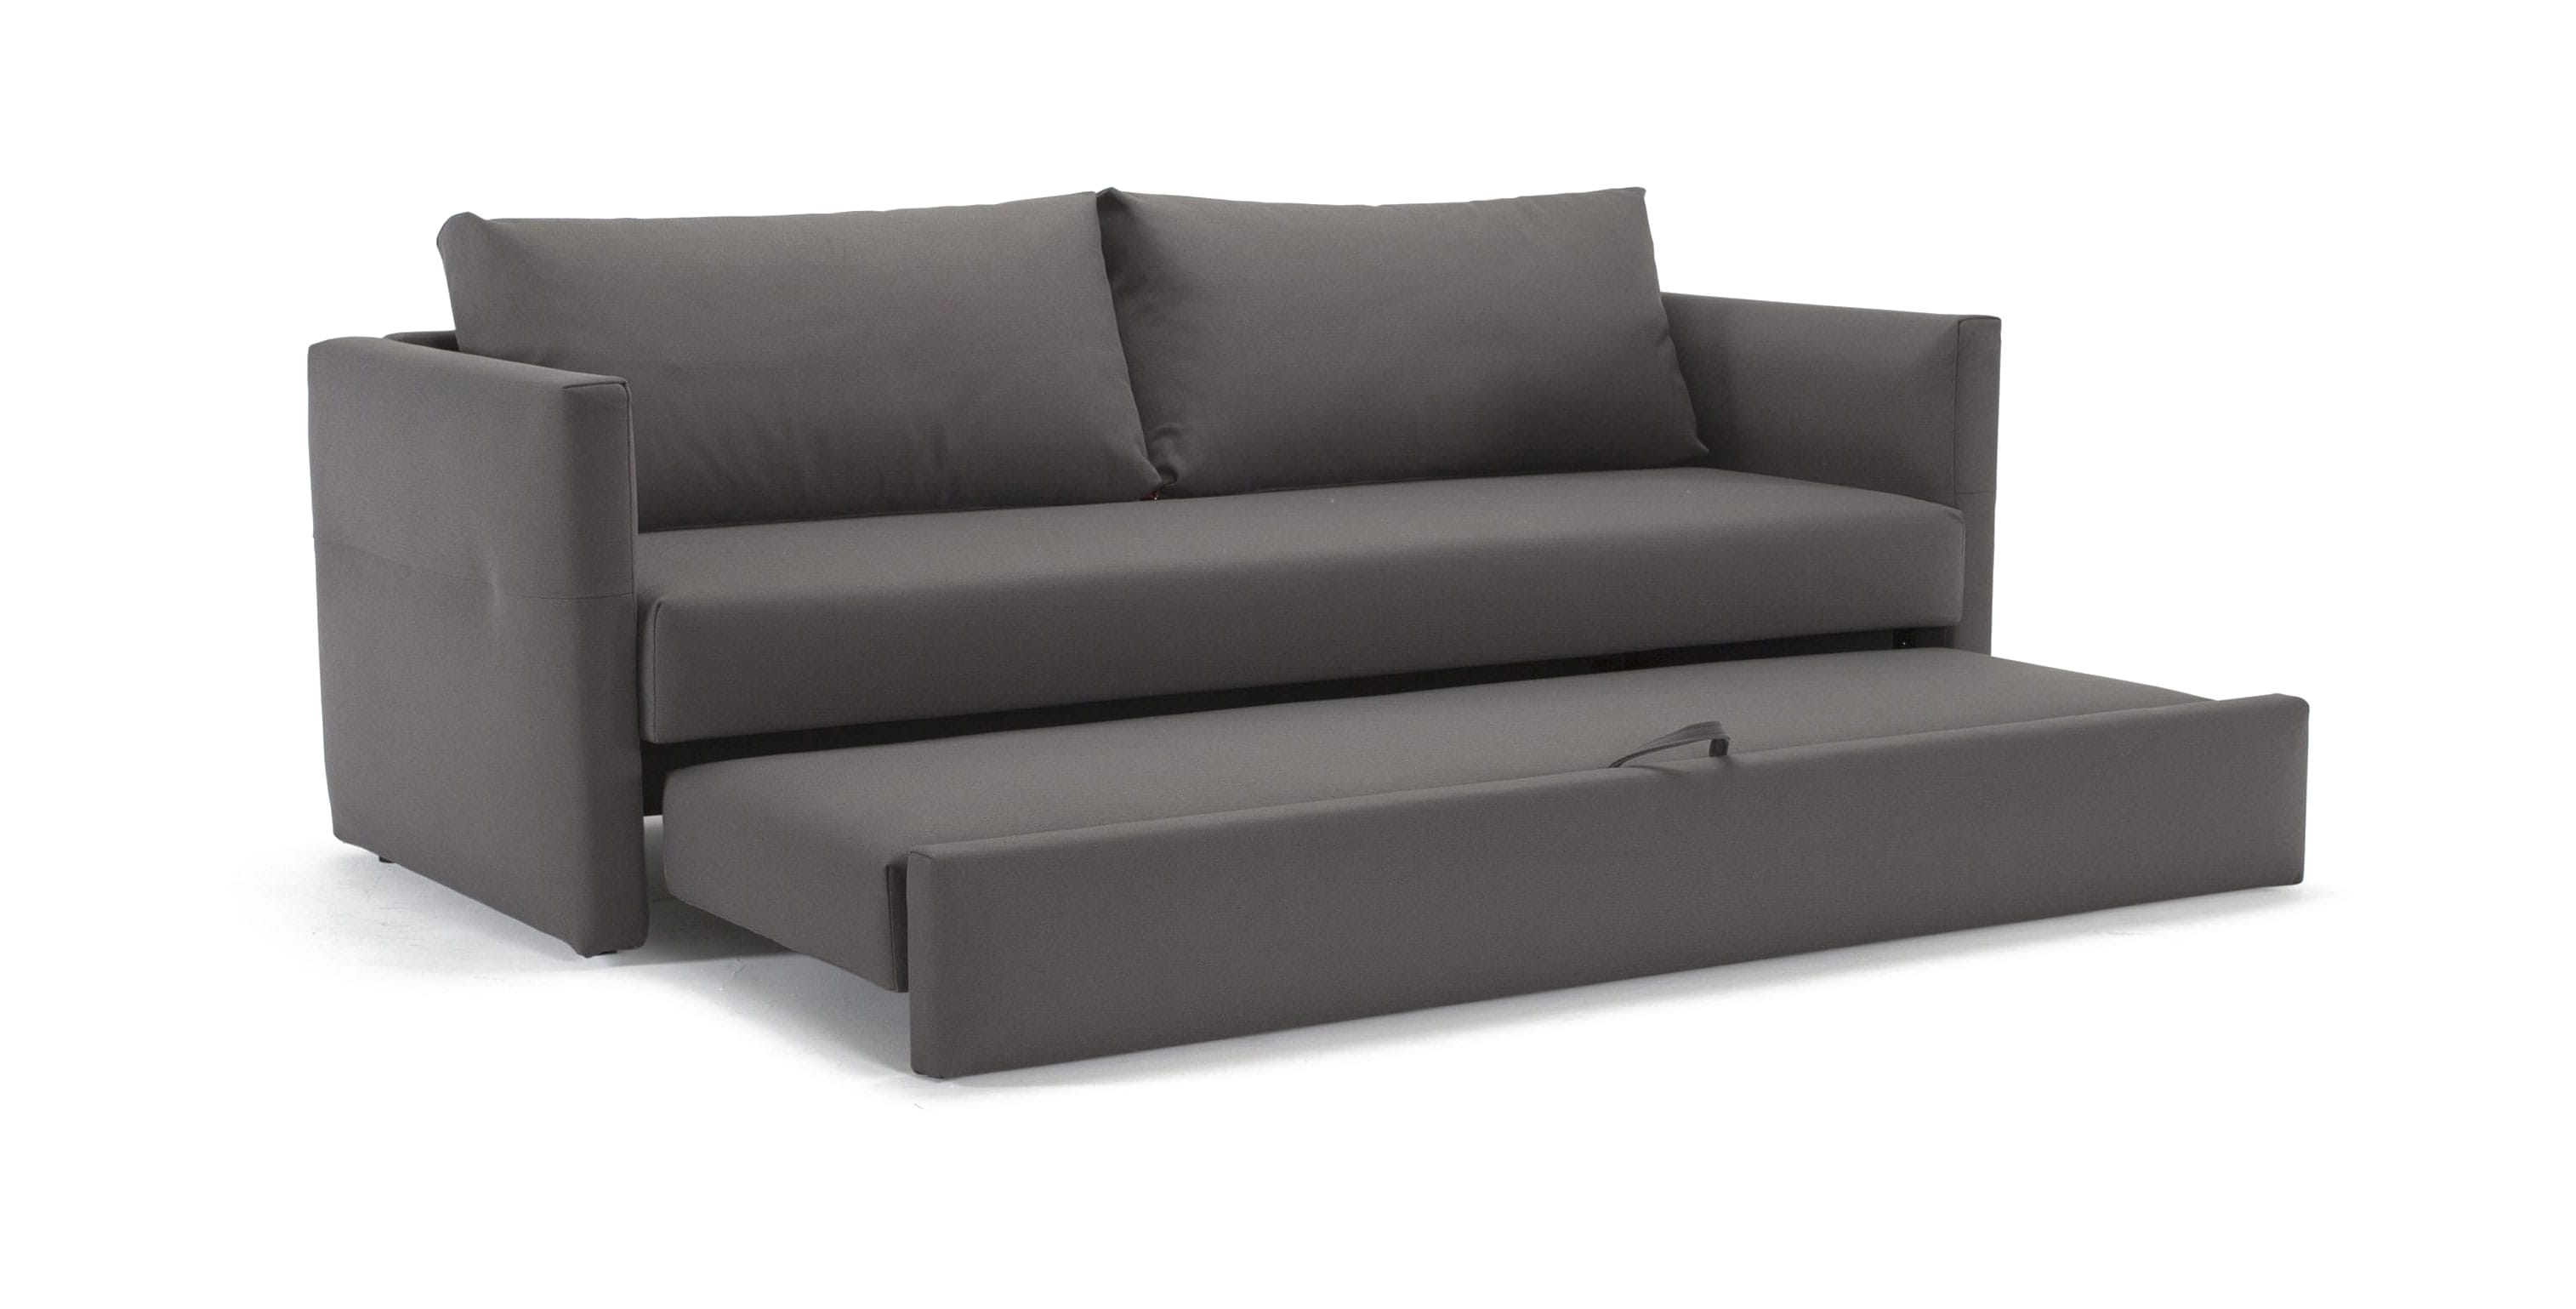 (Full Seal Size) Innovation Toke Coastal Sofa Bed Gray by